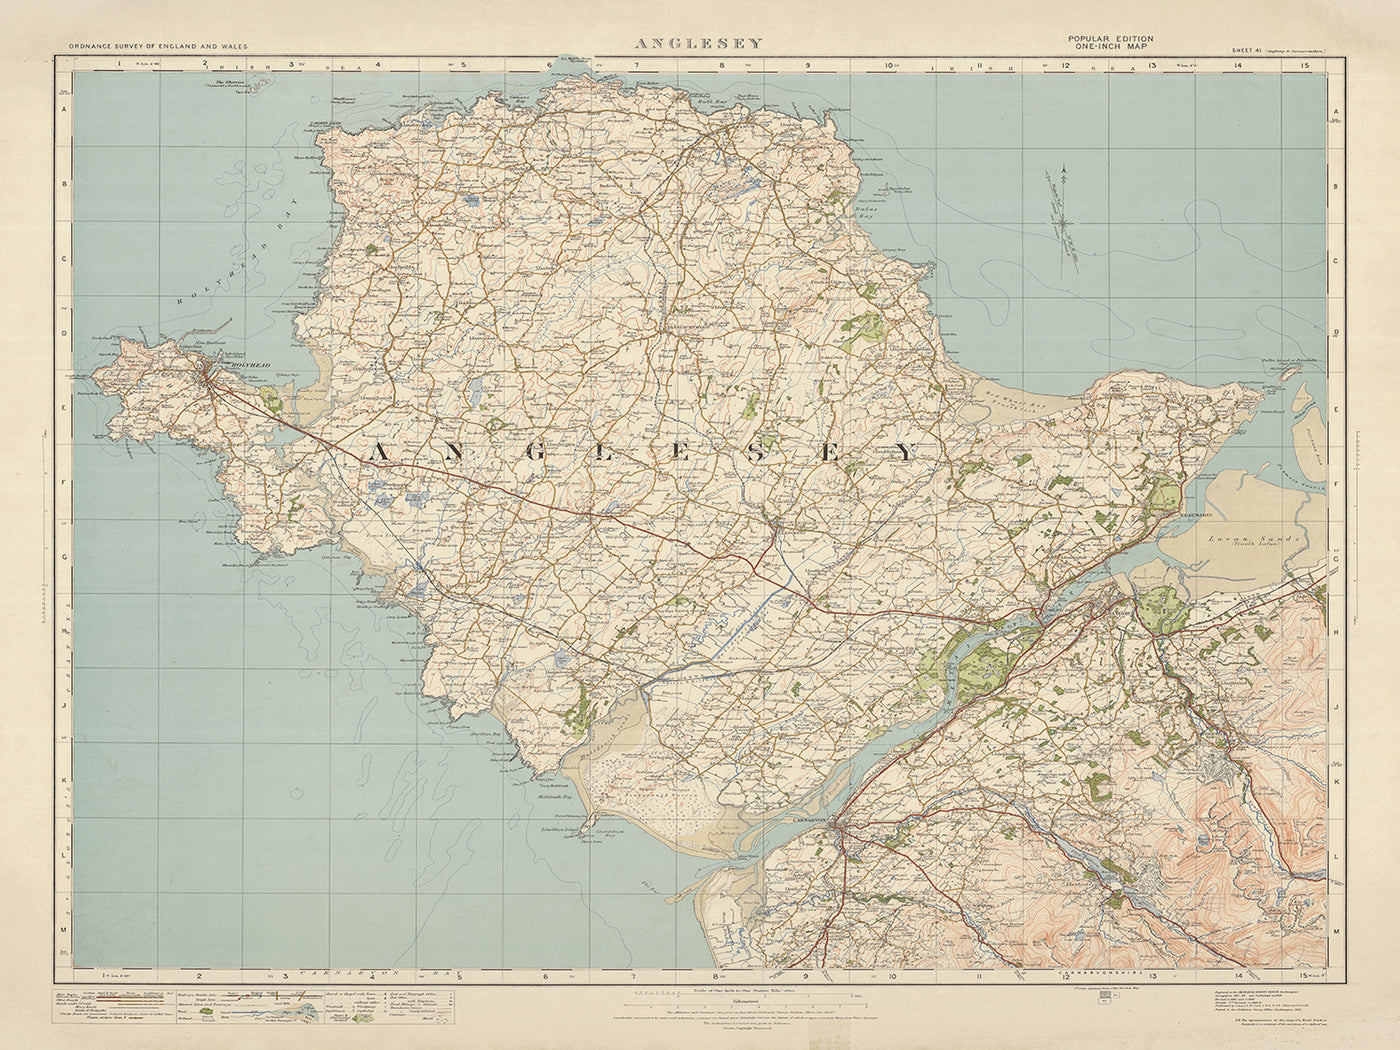 Old Ordnance Survey Map, Blatt 41 – Anglesey, 1925: Bangor, Caernarfon, Holyhead, Amlwch, Beaumaris